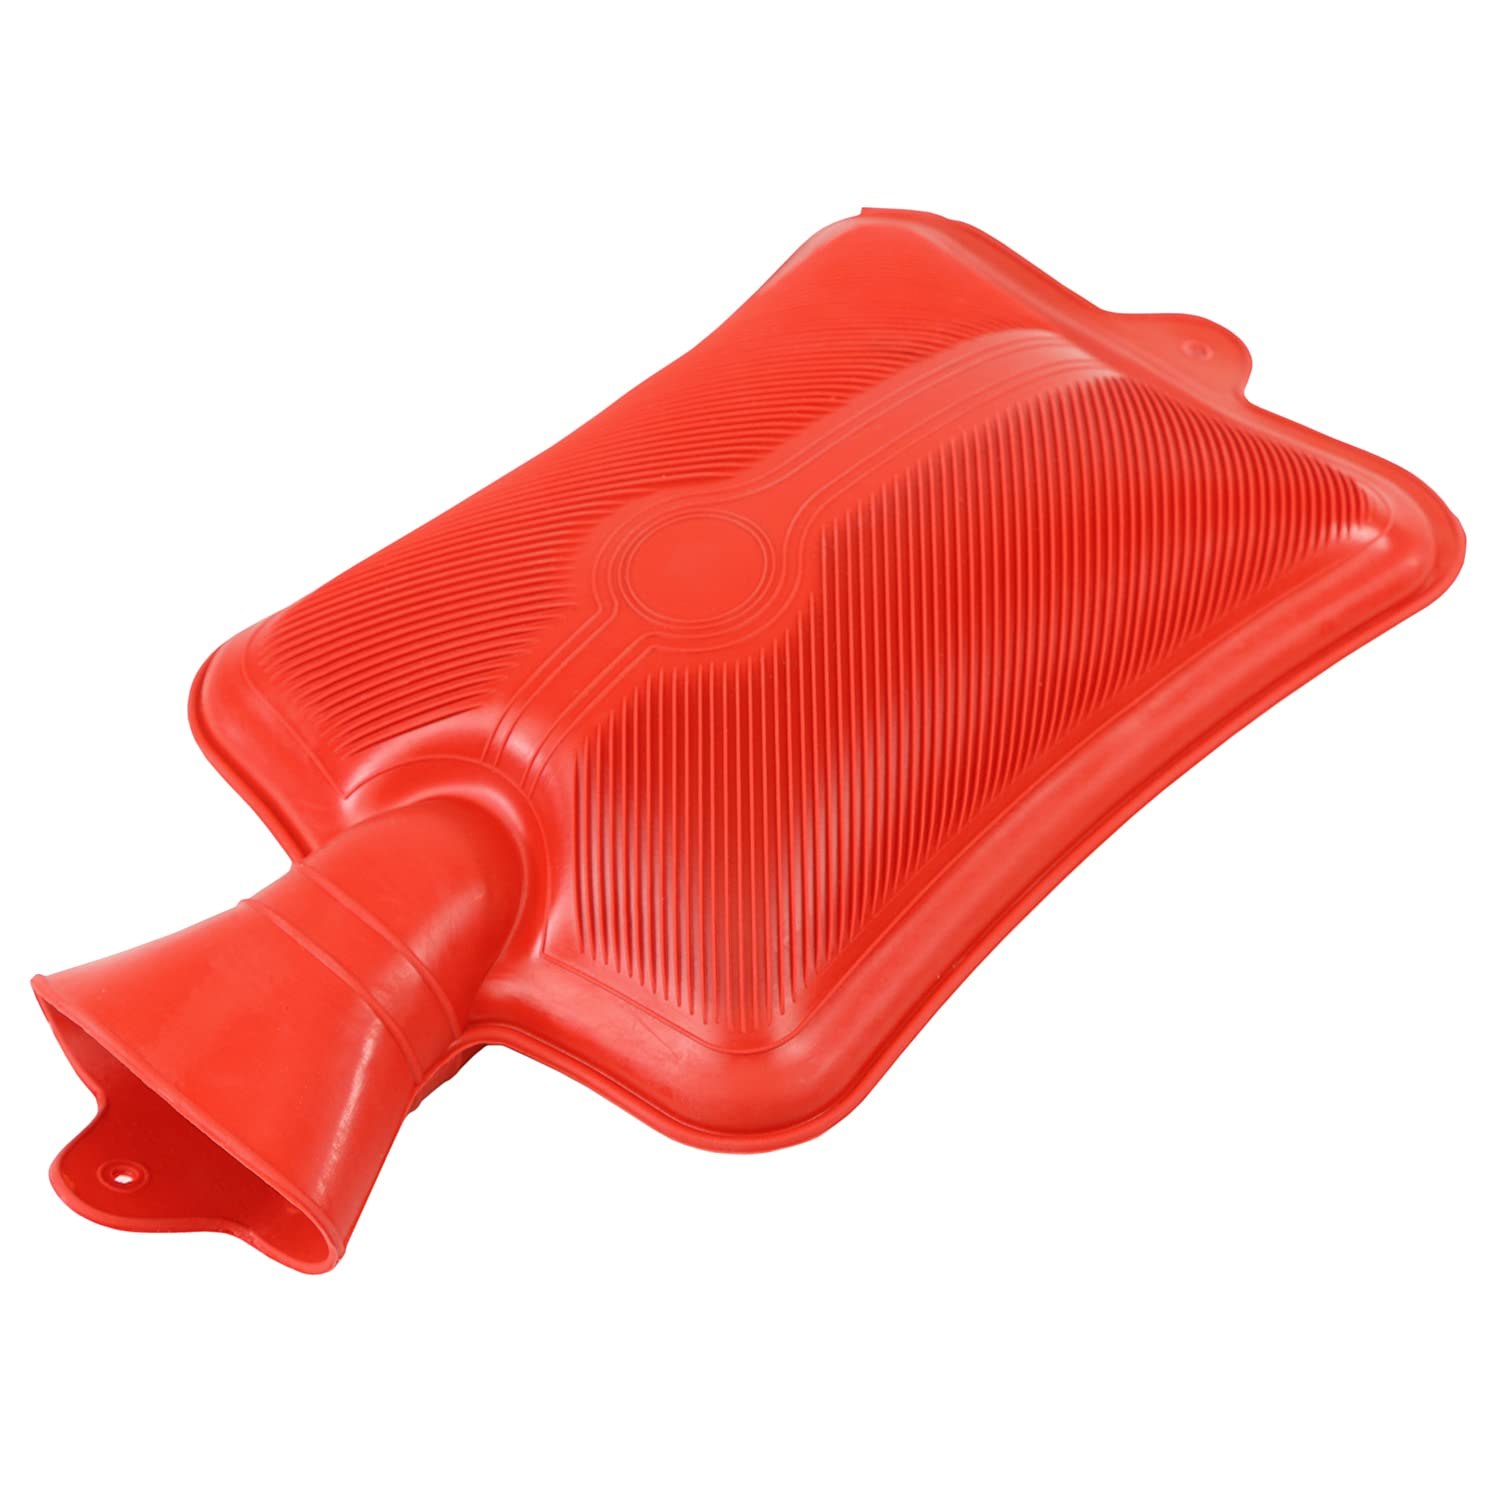 https://cdn.bestreviews.com/images/v4desktop/product-matrix/relief-pak-classic-red-rubber-hot-water-bottle.jpg